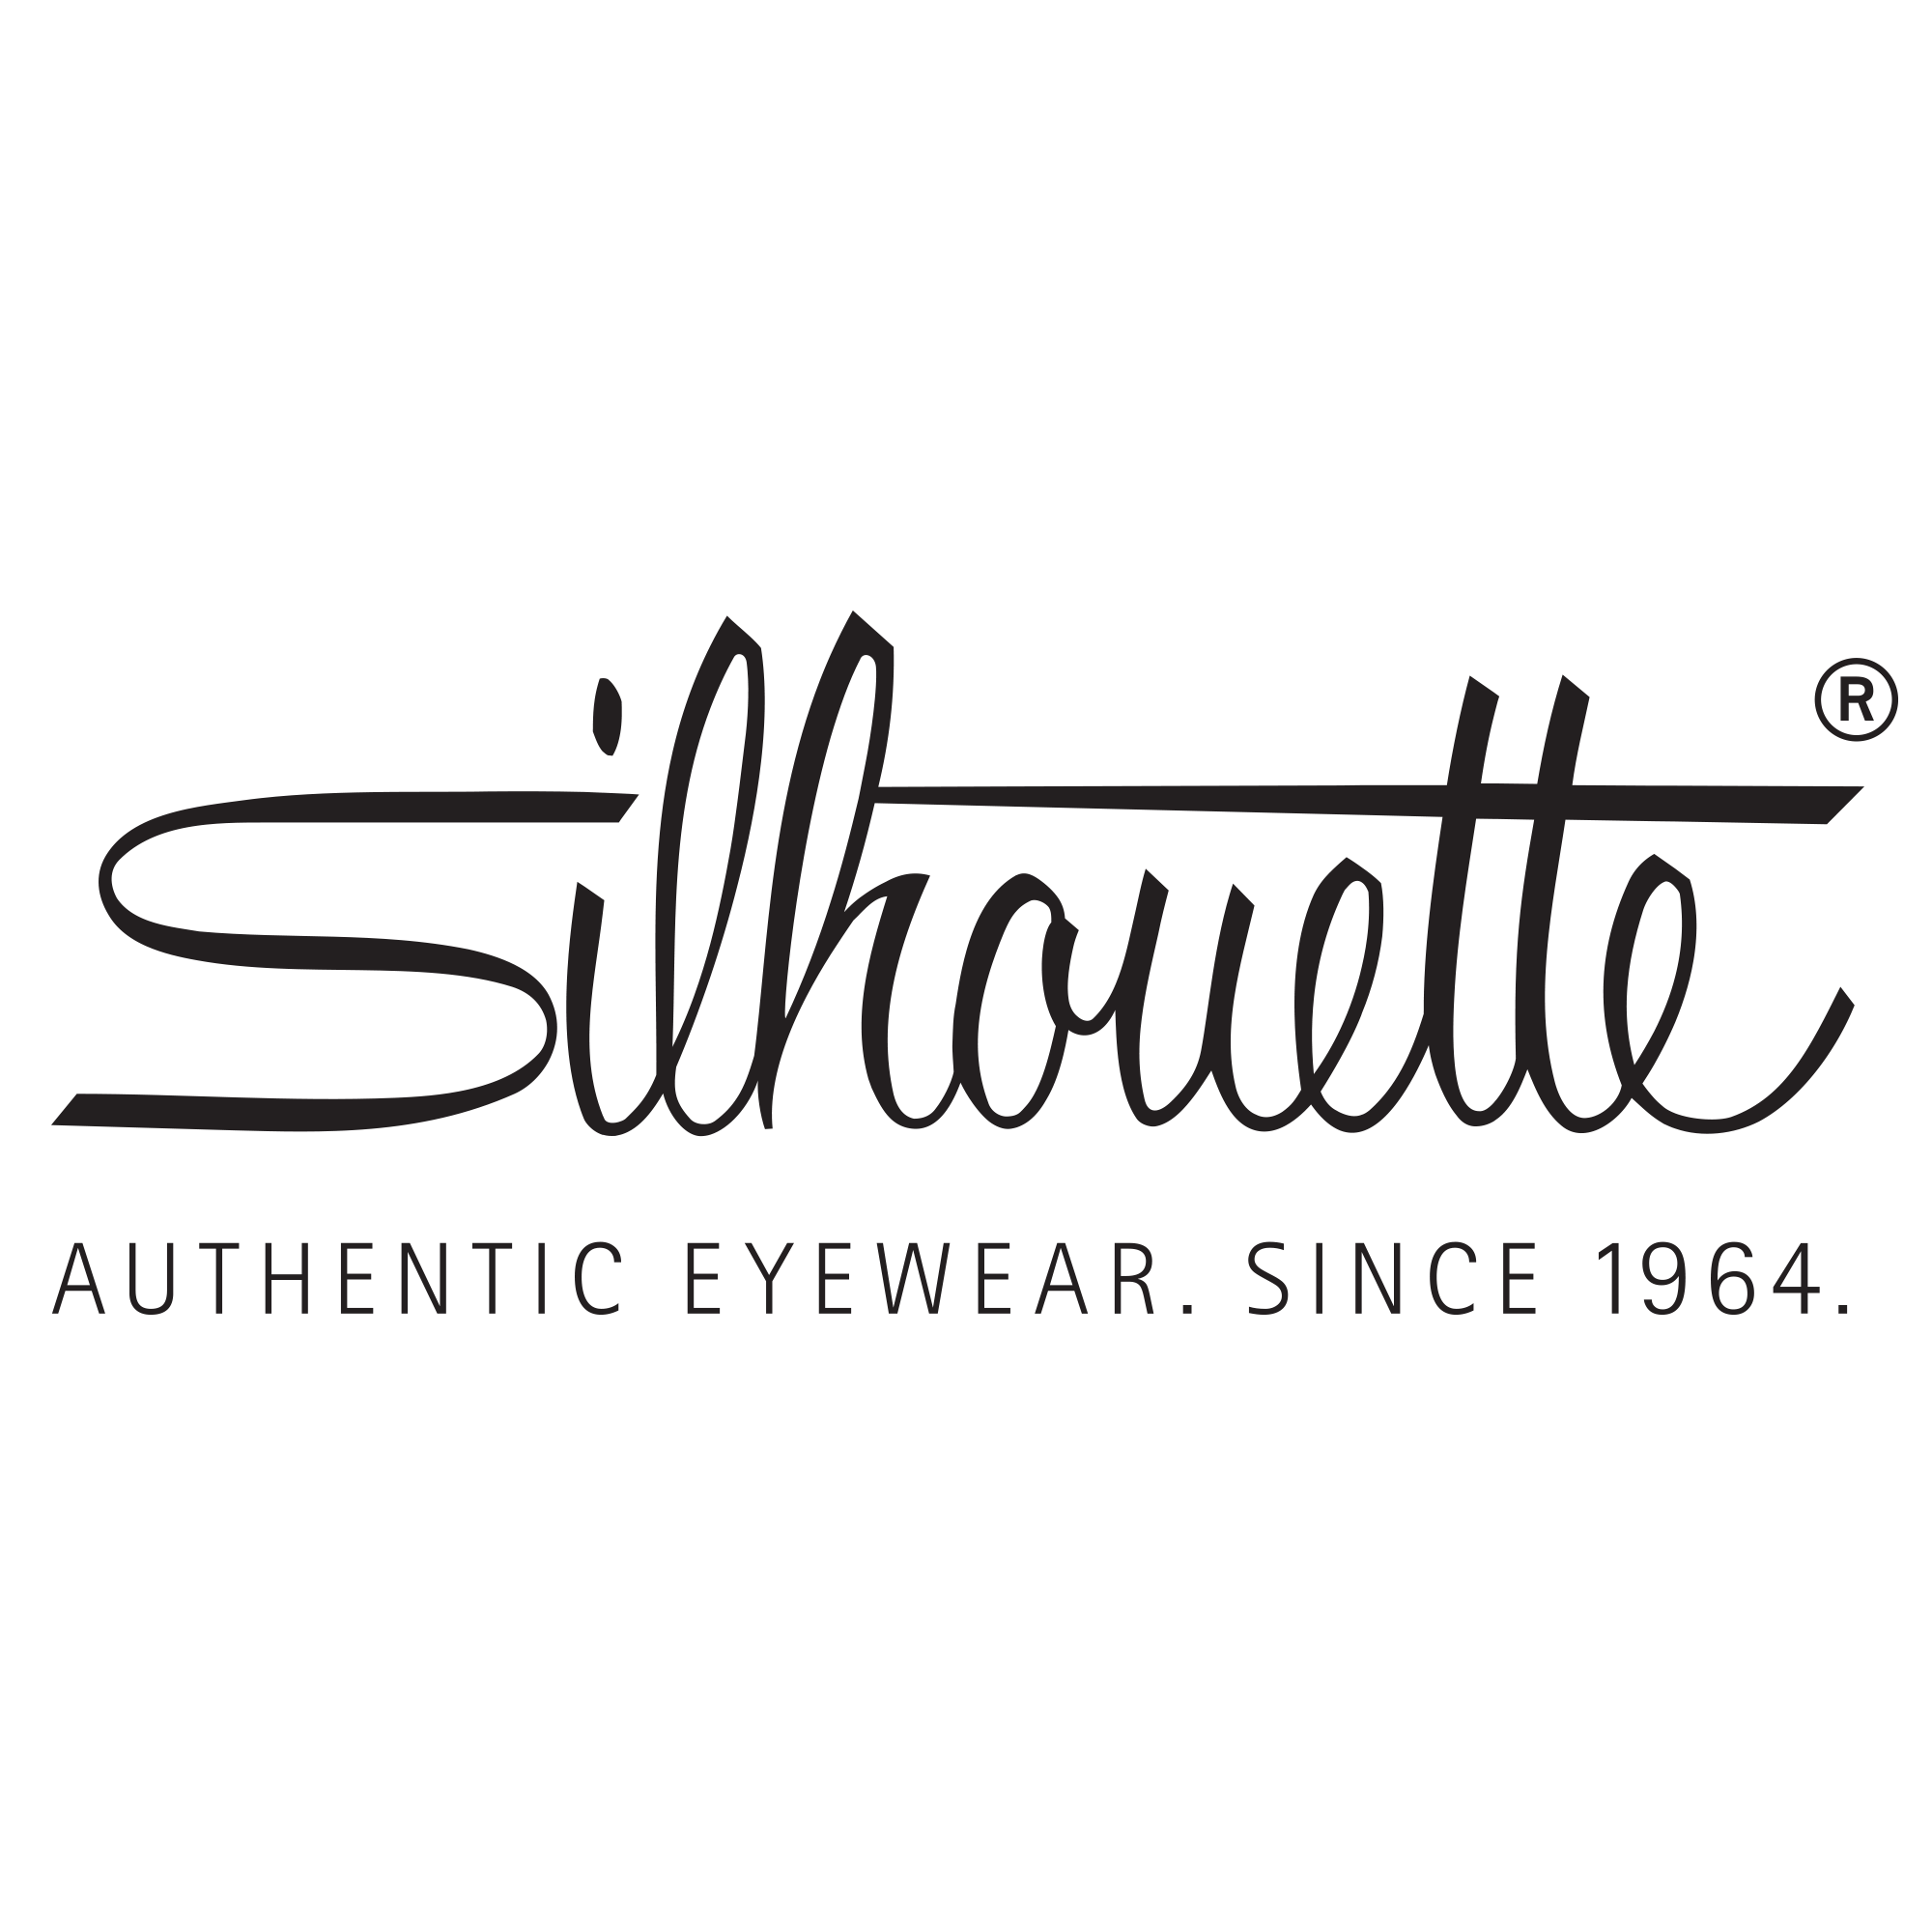 Silhouette eyeglasses logo